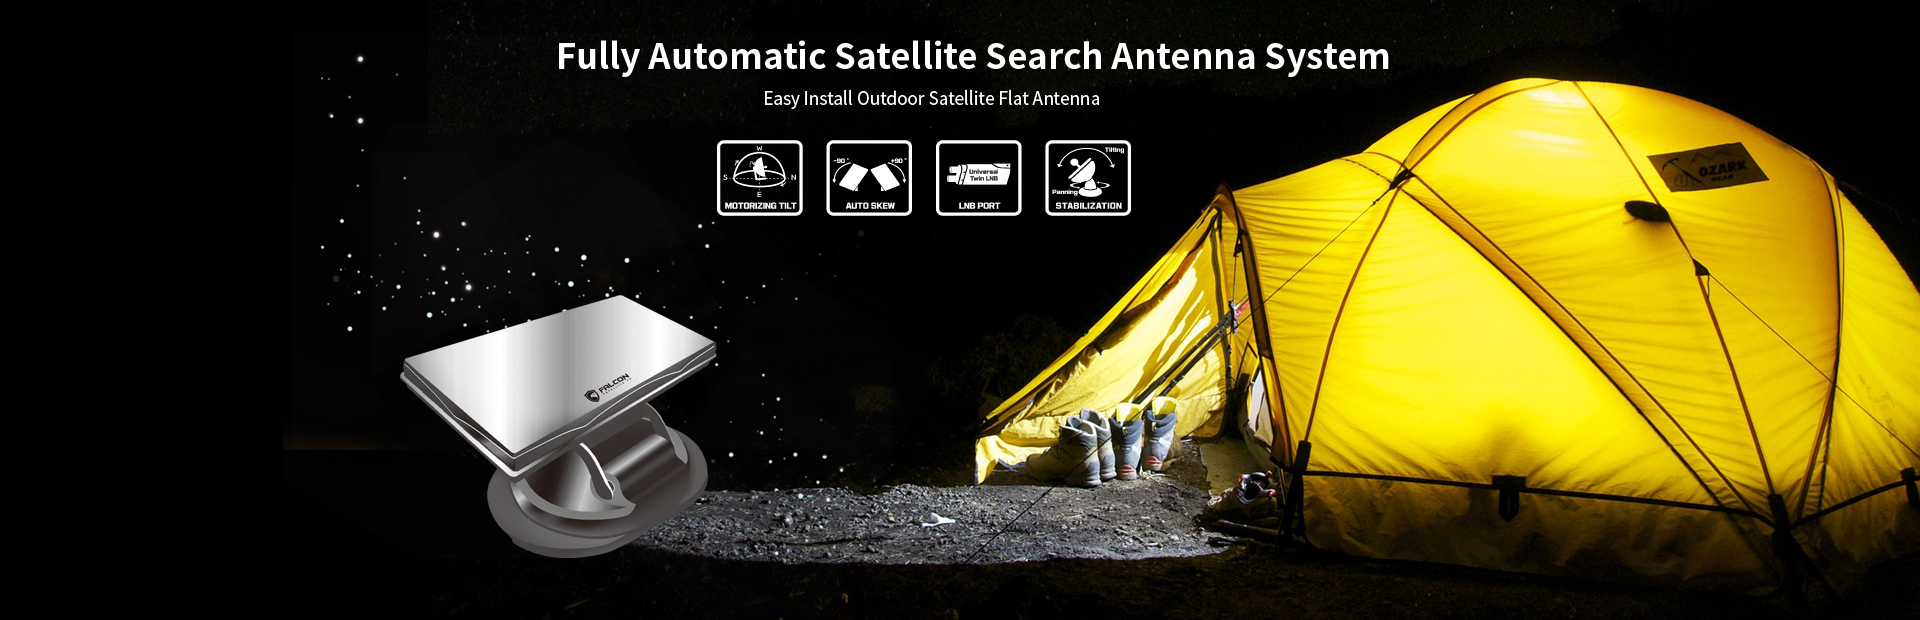 Fully Aytomatic Satellite Search Antenna System